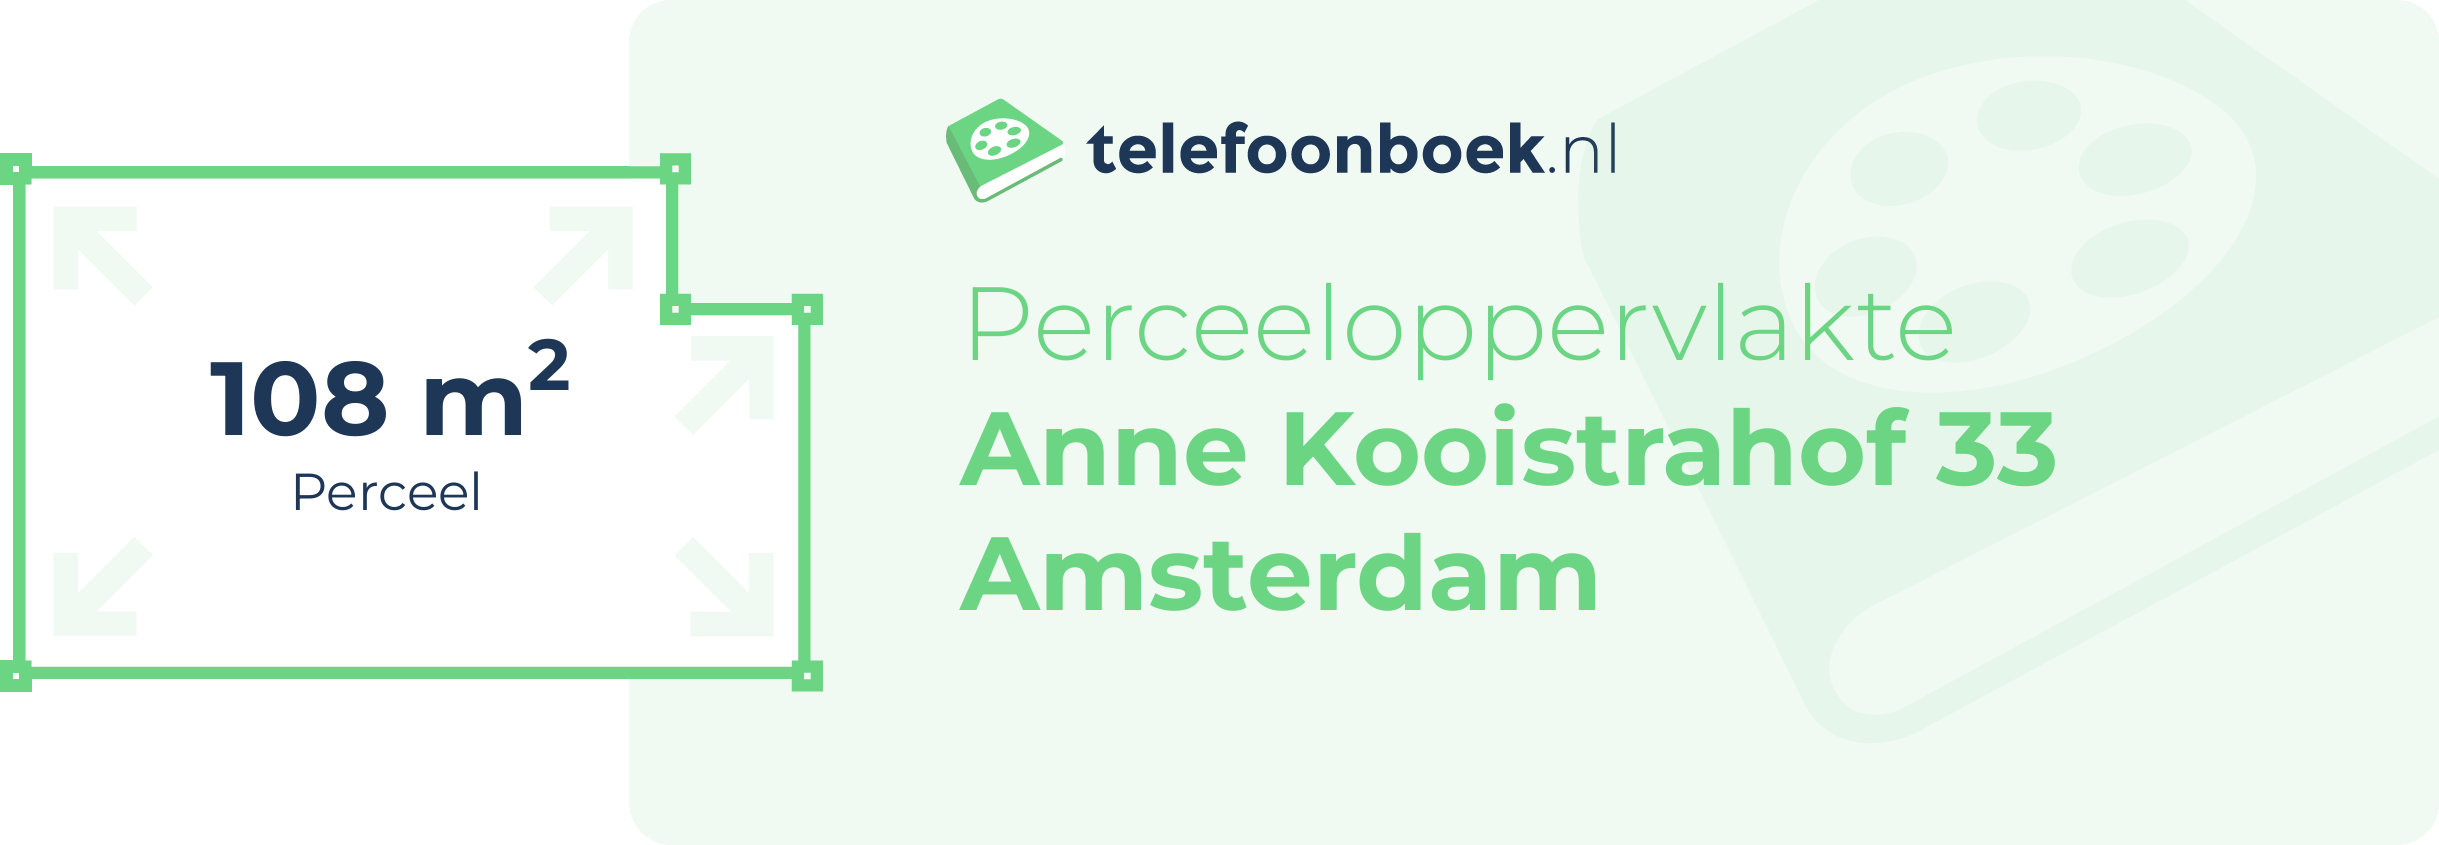 Perceeloppervlakte Anne Kooistrahof 33 Amsterdam